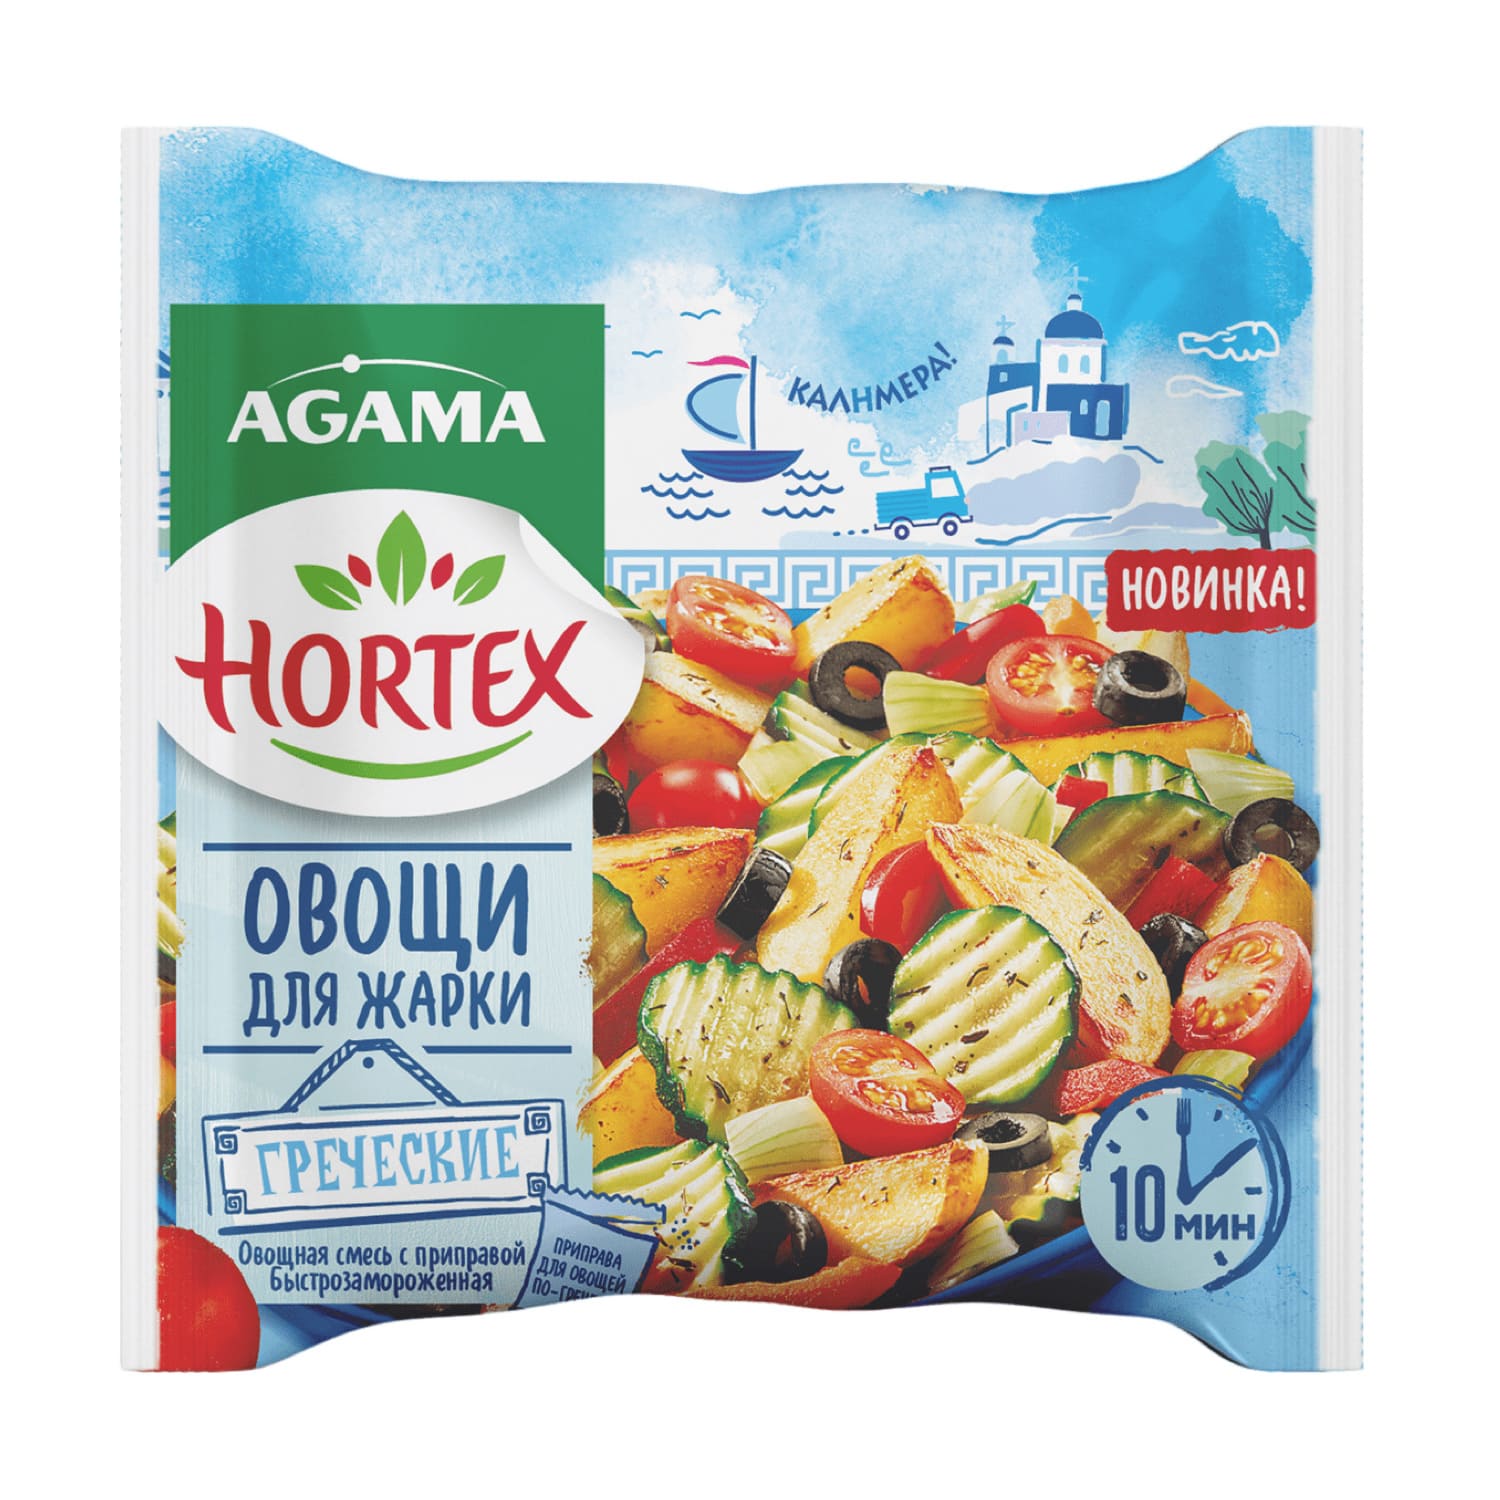 Овощи для жарки греческие быстрозаморож. 400 гр